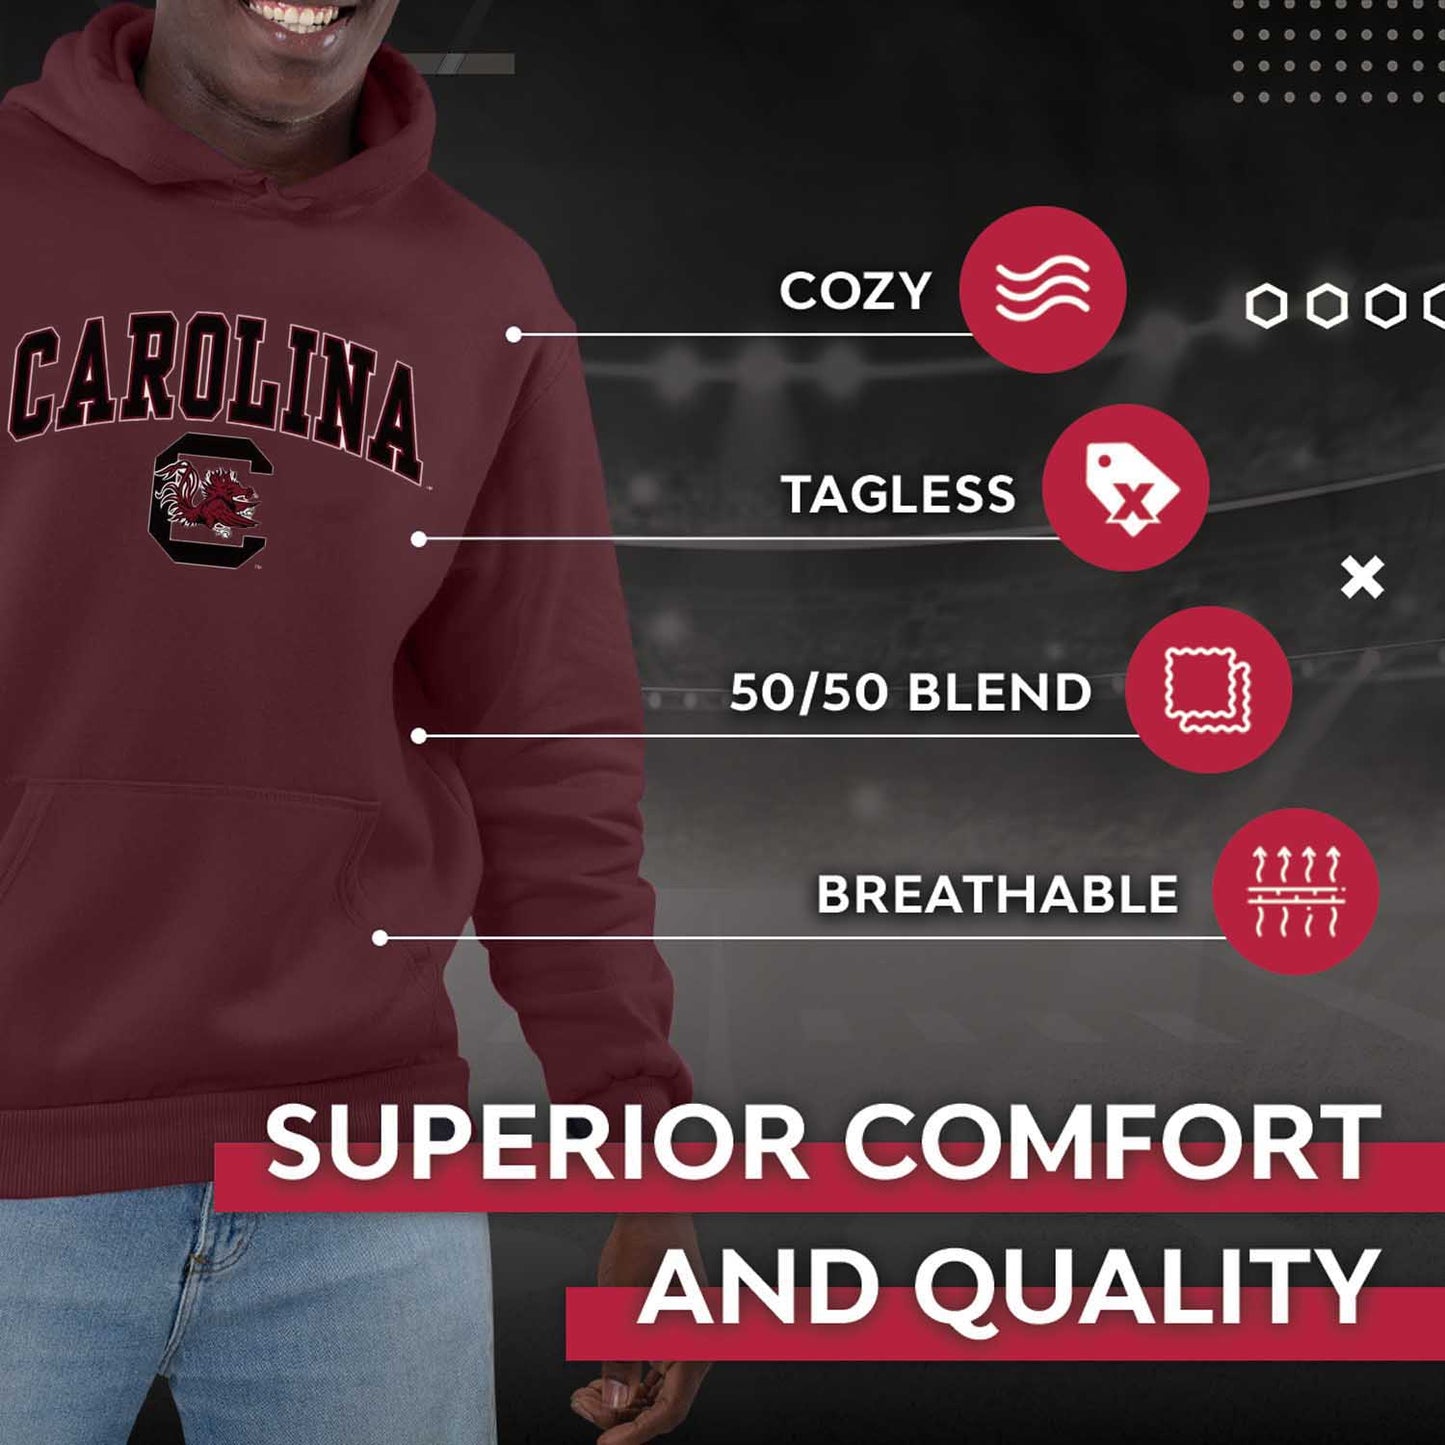 South Carolina Gamecocks Adult Arch & Logo Soft Style Gameday Hooded Sweatshirt - Maroon